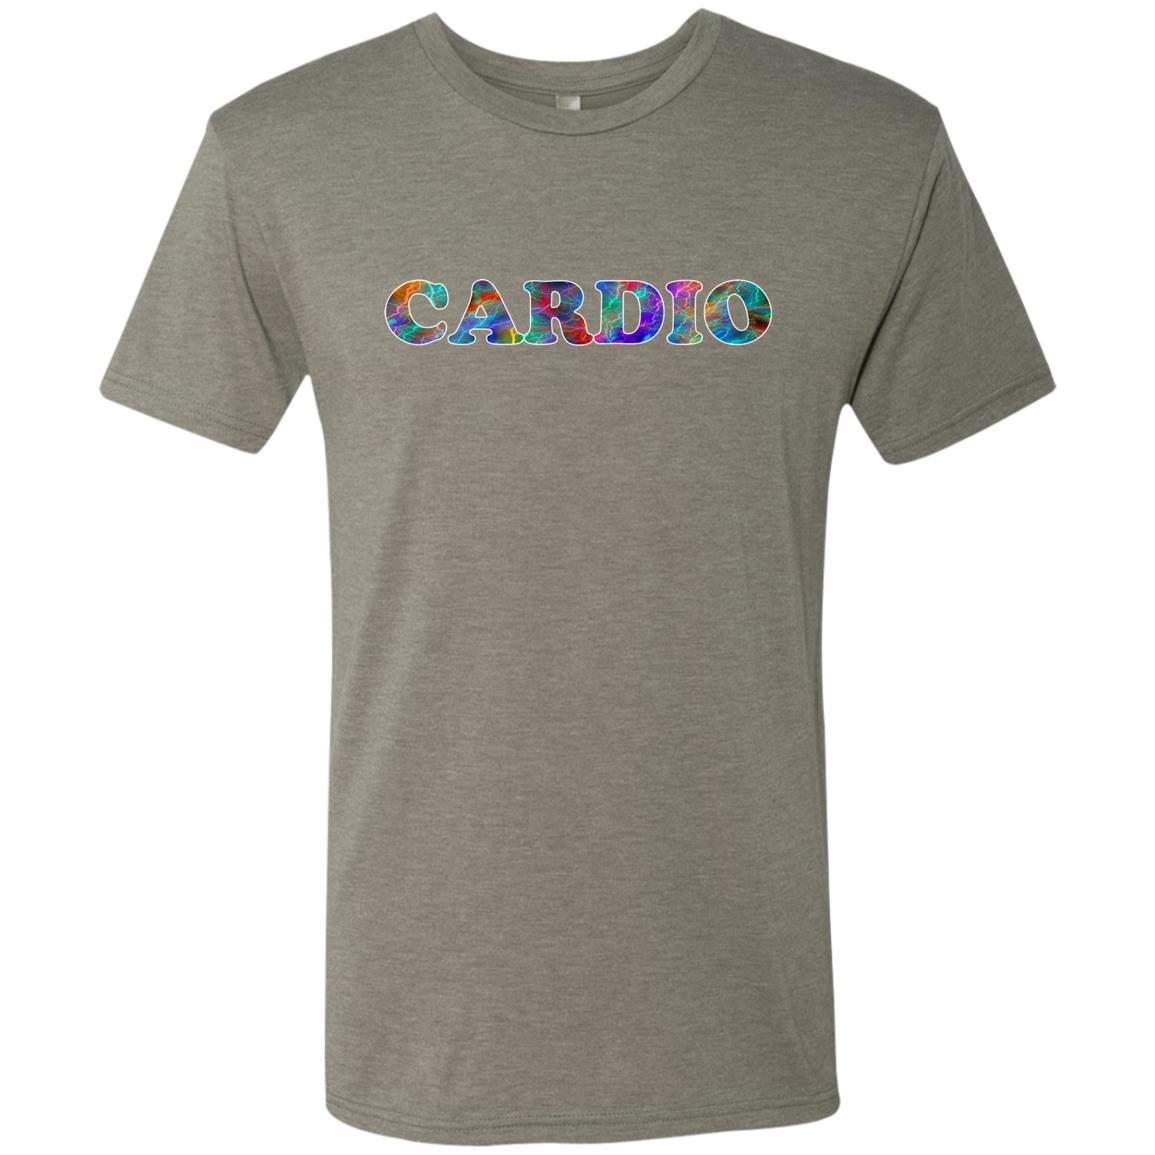 Cardio Sport T-Shirt